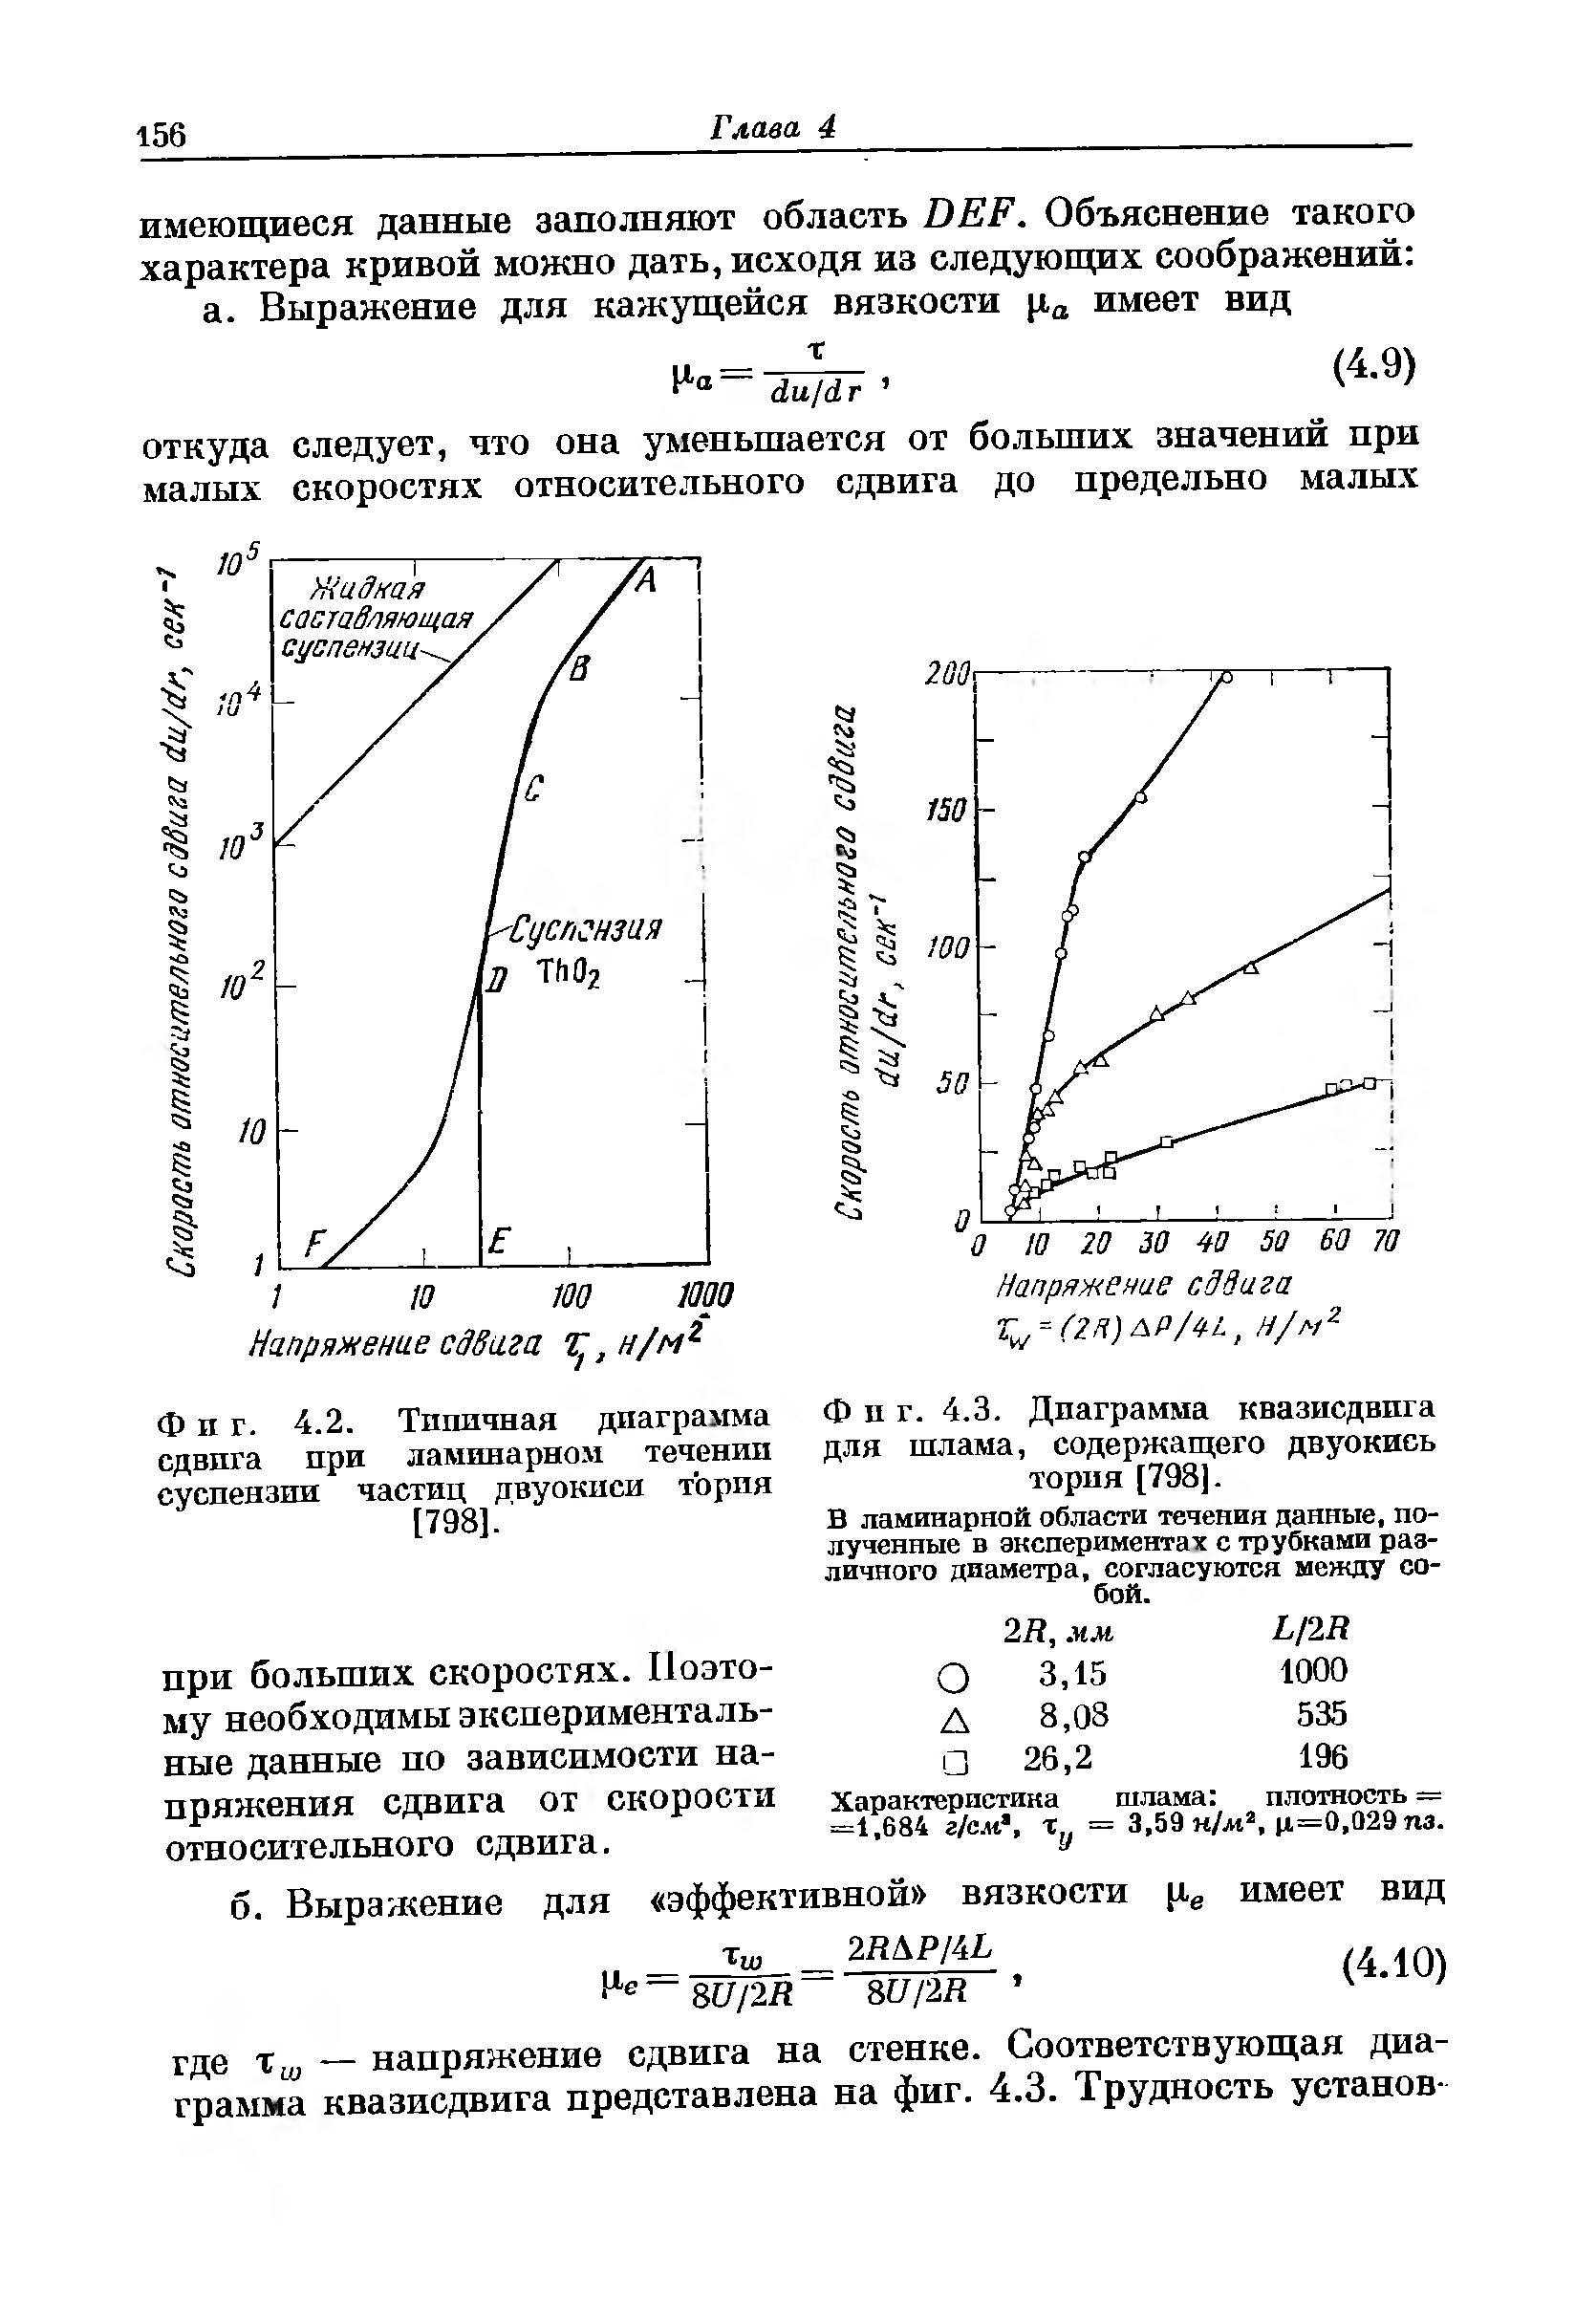 Фиг. 4.2. Типичная диаграмма сдвига при <a href="/info/639">ламинарном течении</a> суспензии частиц двуокиси тория [798].
